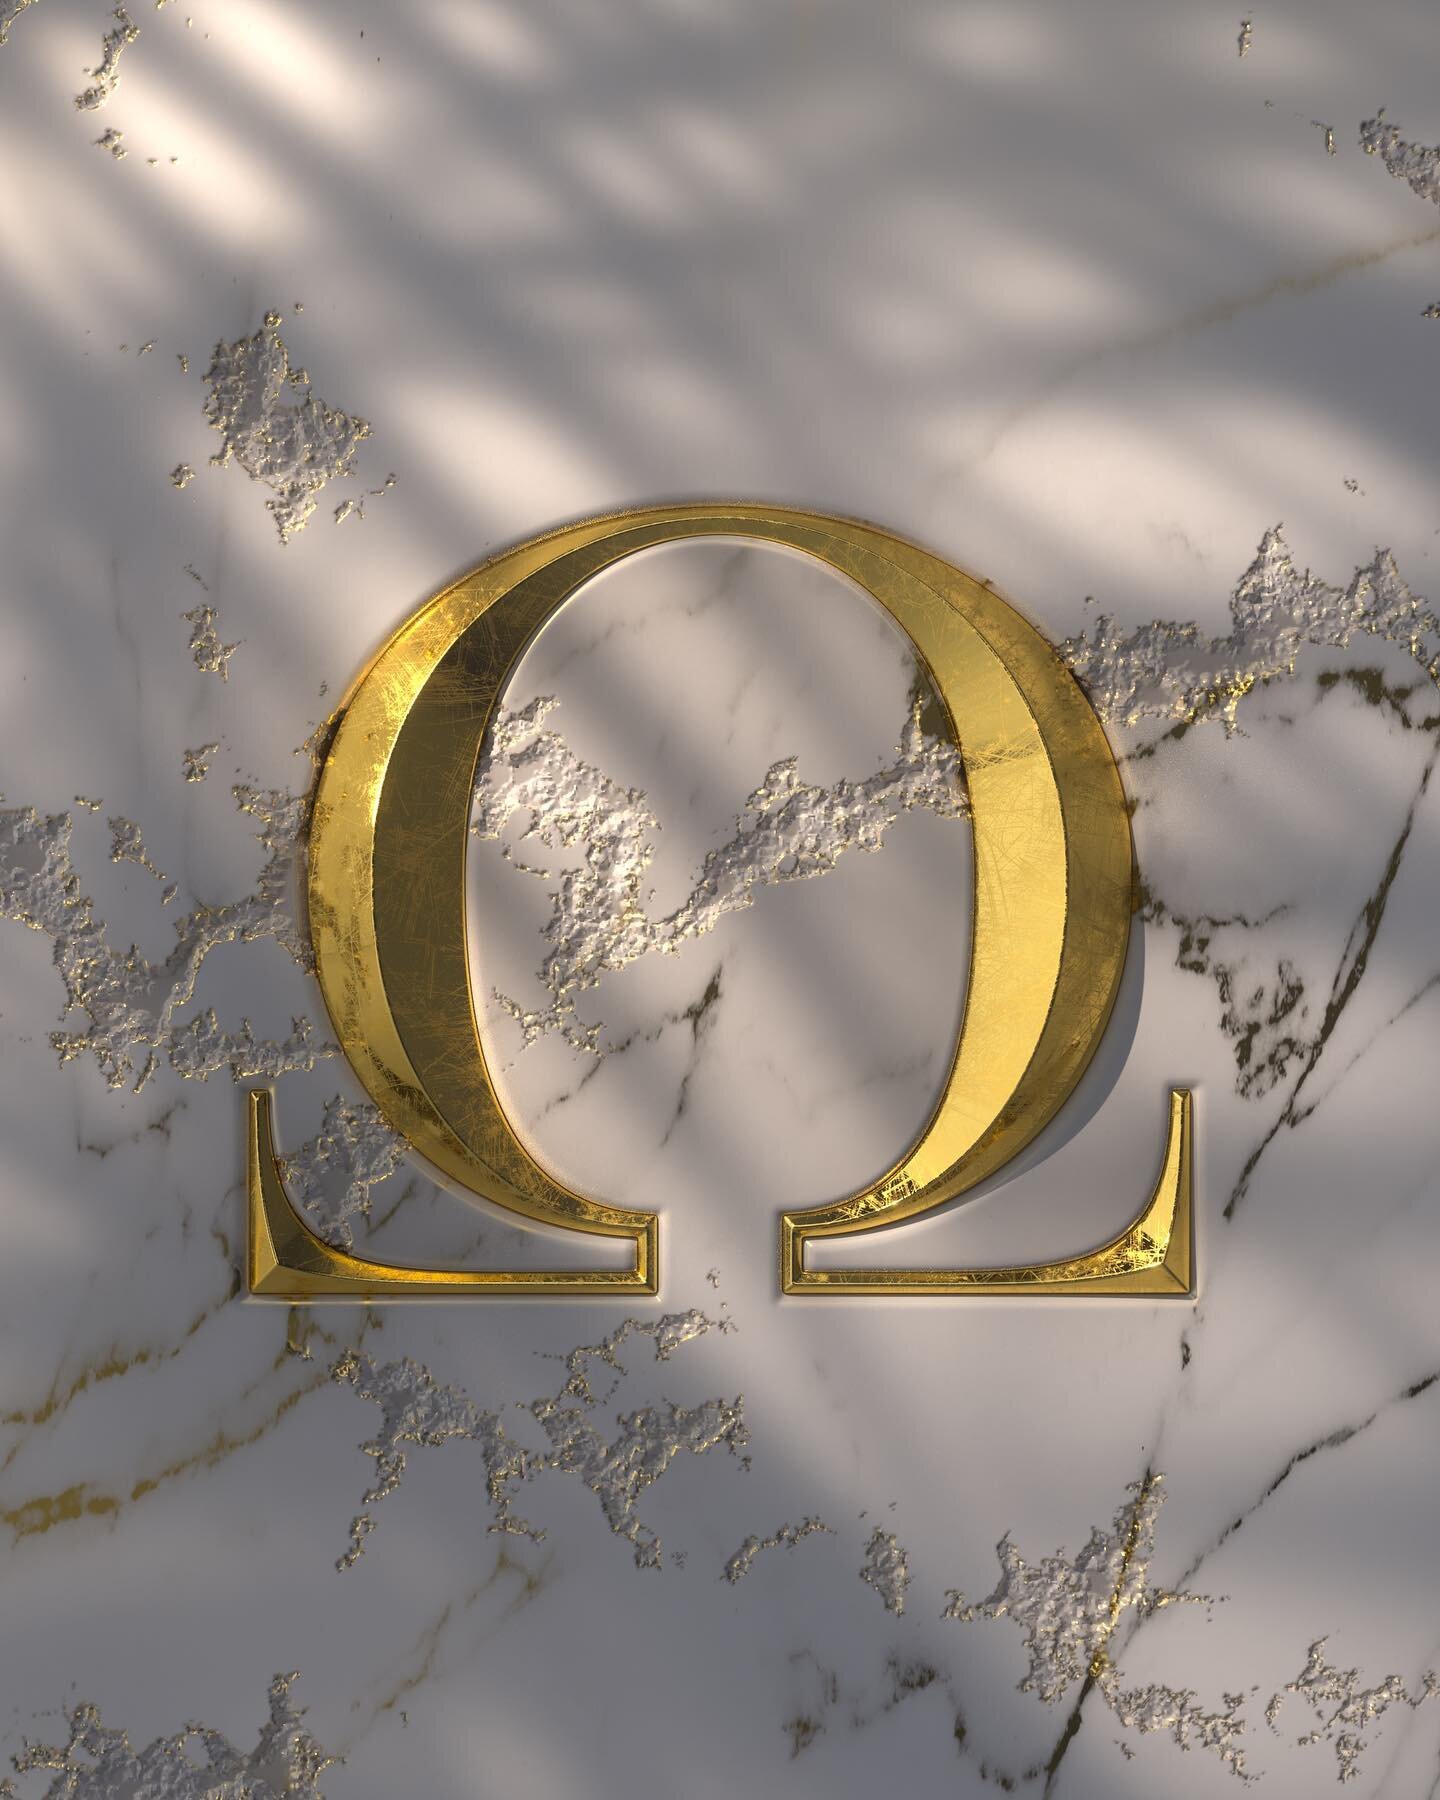 【&Omega;】
.⁣
.⁣
.⁣
.⁣
.
#3d #3dart #3ddesign #cinema4d #octane #design #octane #typography #type